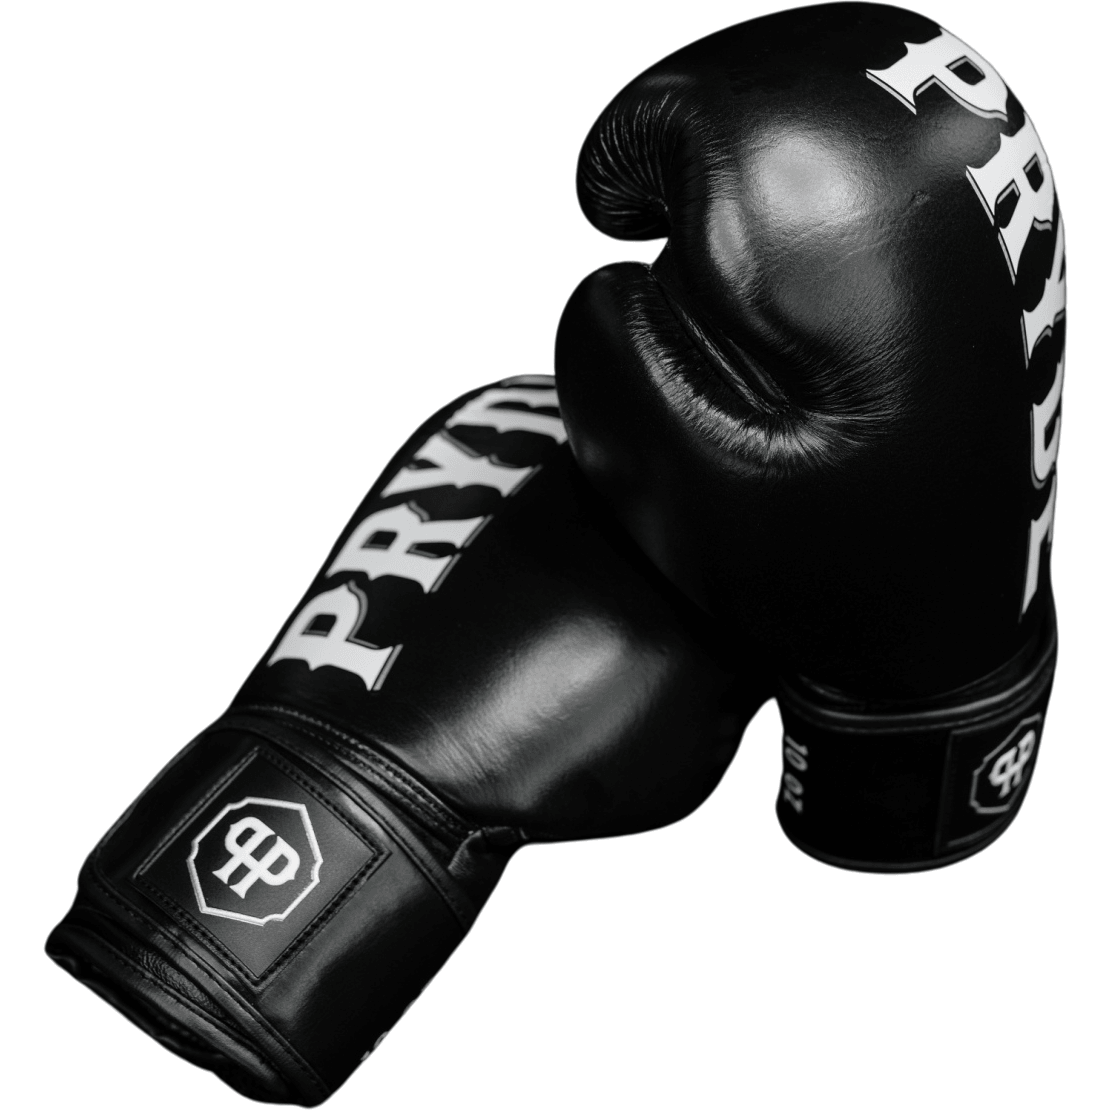 PRYDE Muay Thai Gloves - Black - Muay Thailand